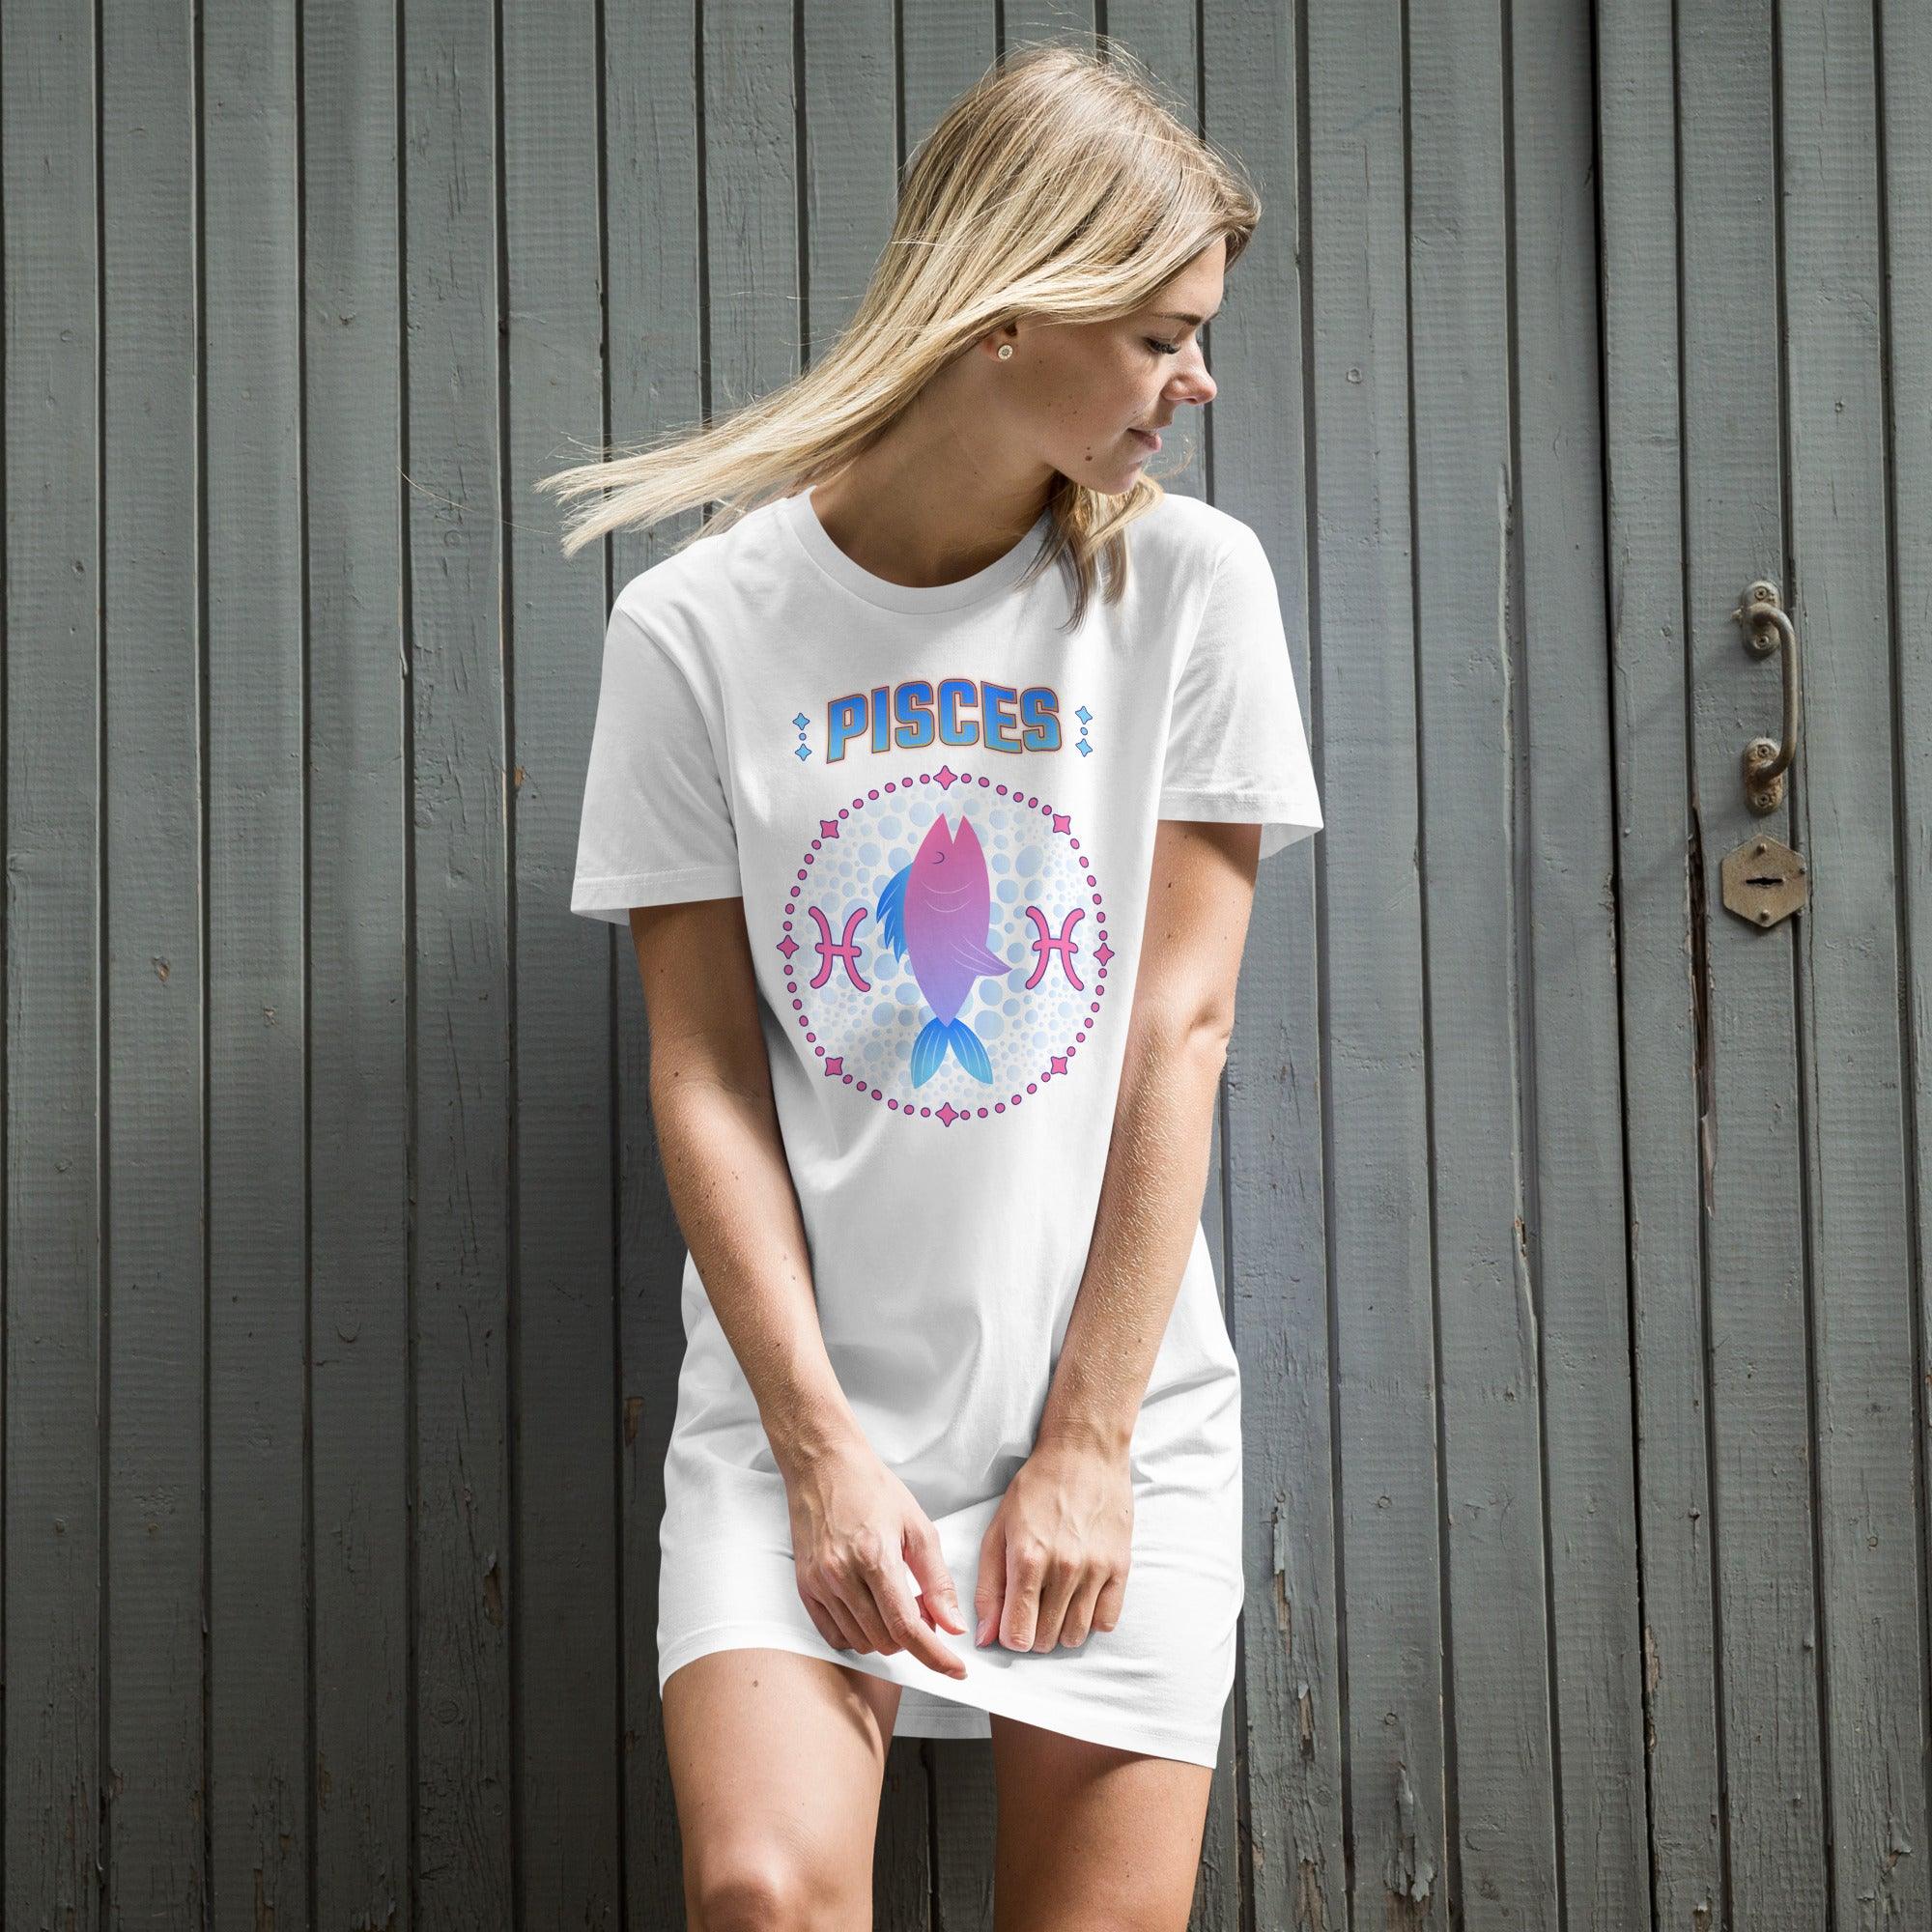 Pisces Organic Cotton T-Shirt Dress | Zodiac Series 1 - Beyond T-shirts